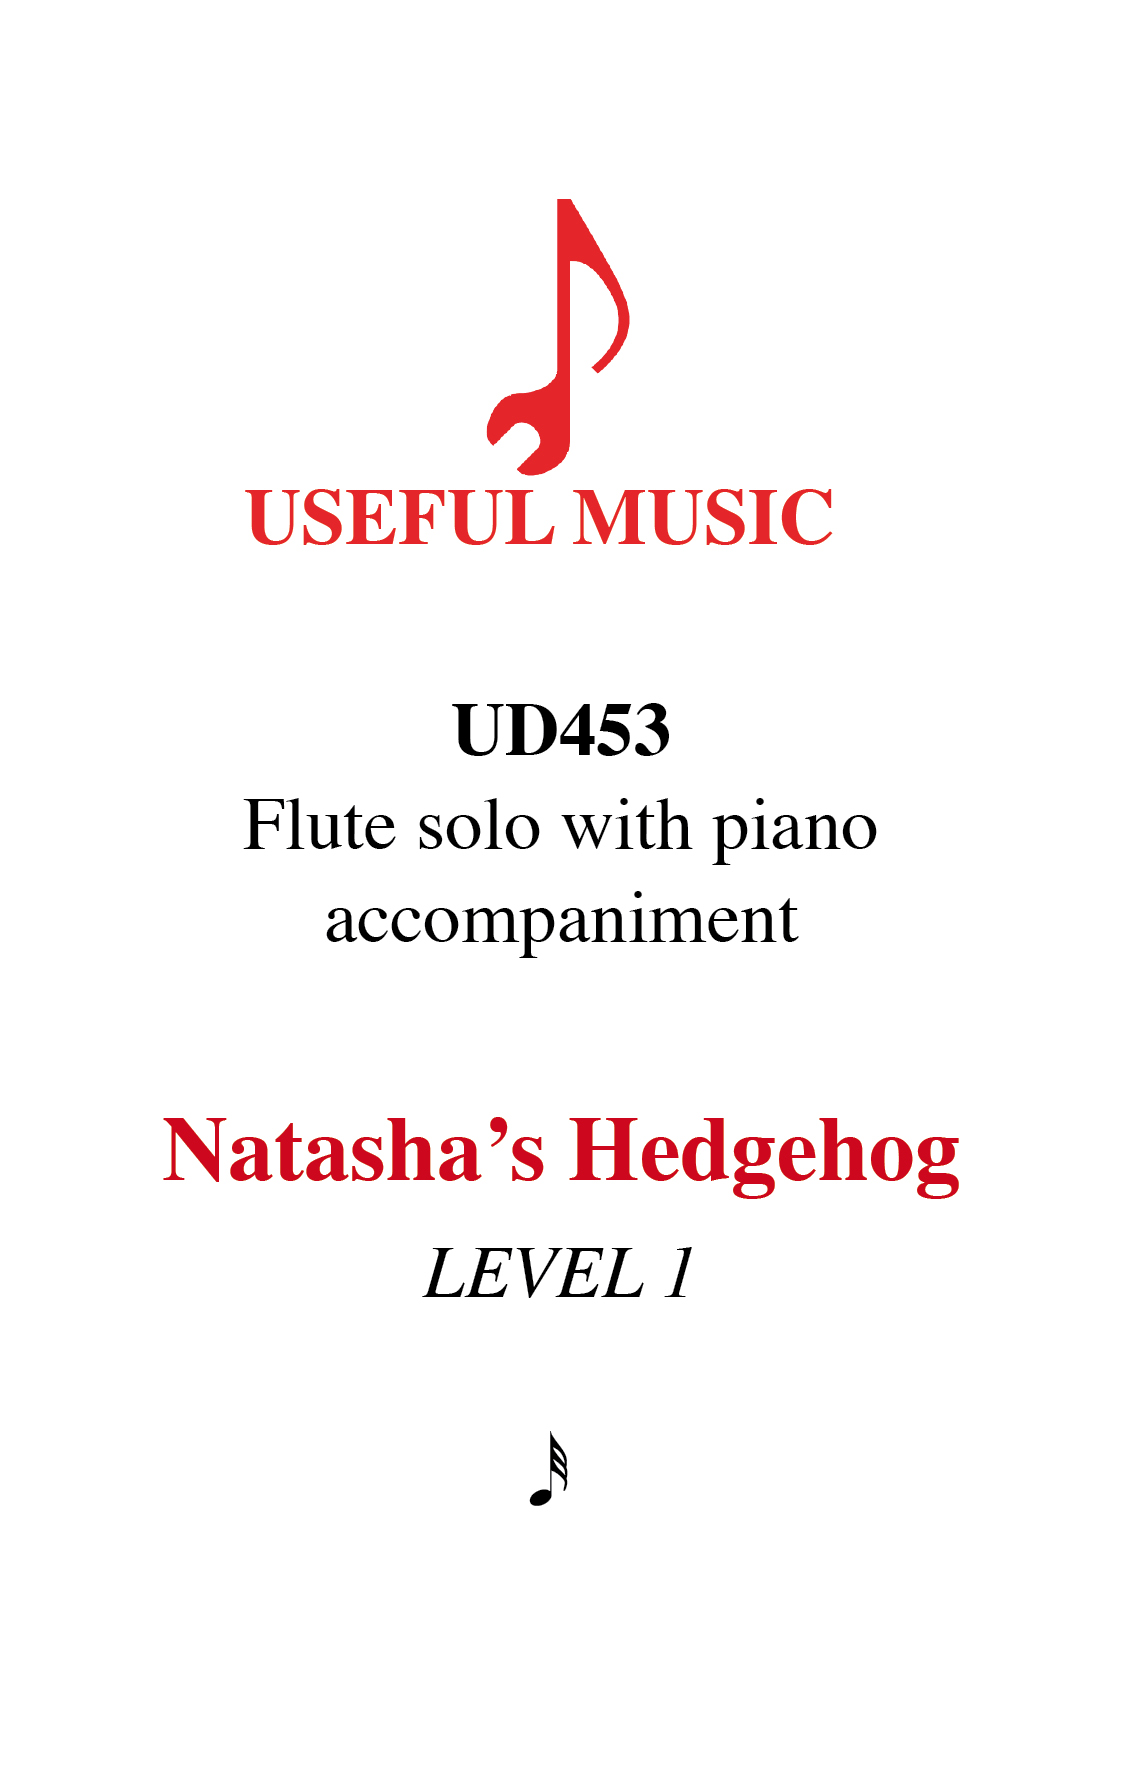 Natasha's Hedgehog - flute with piano accompaniment